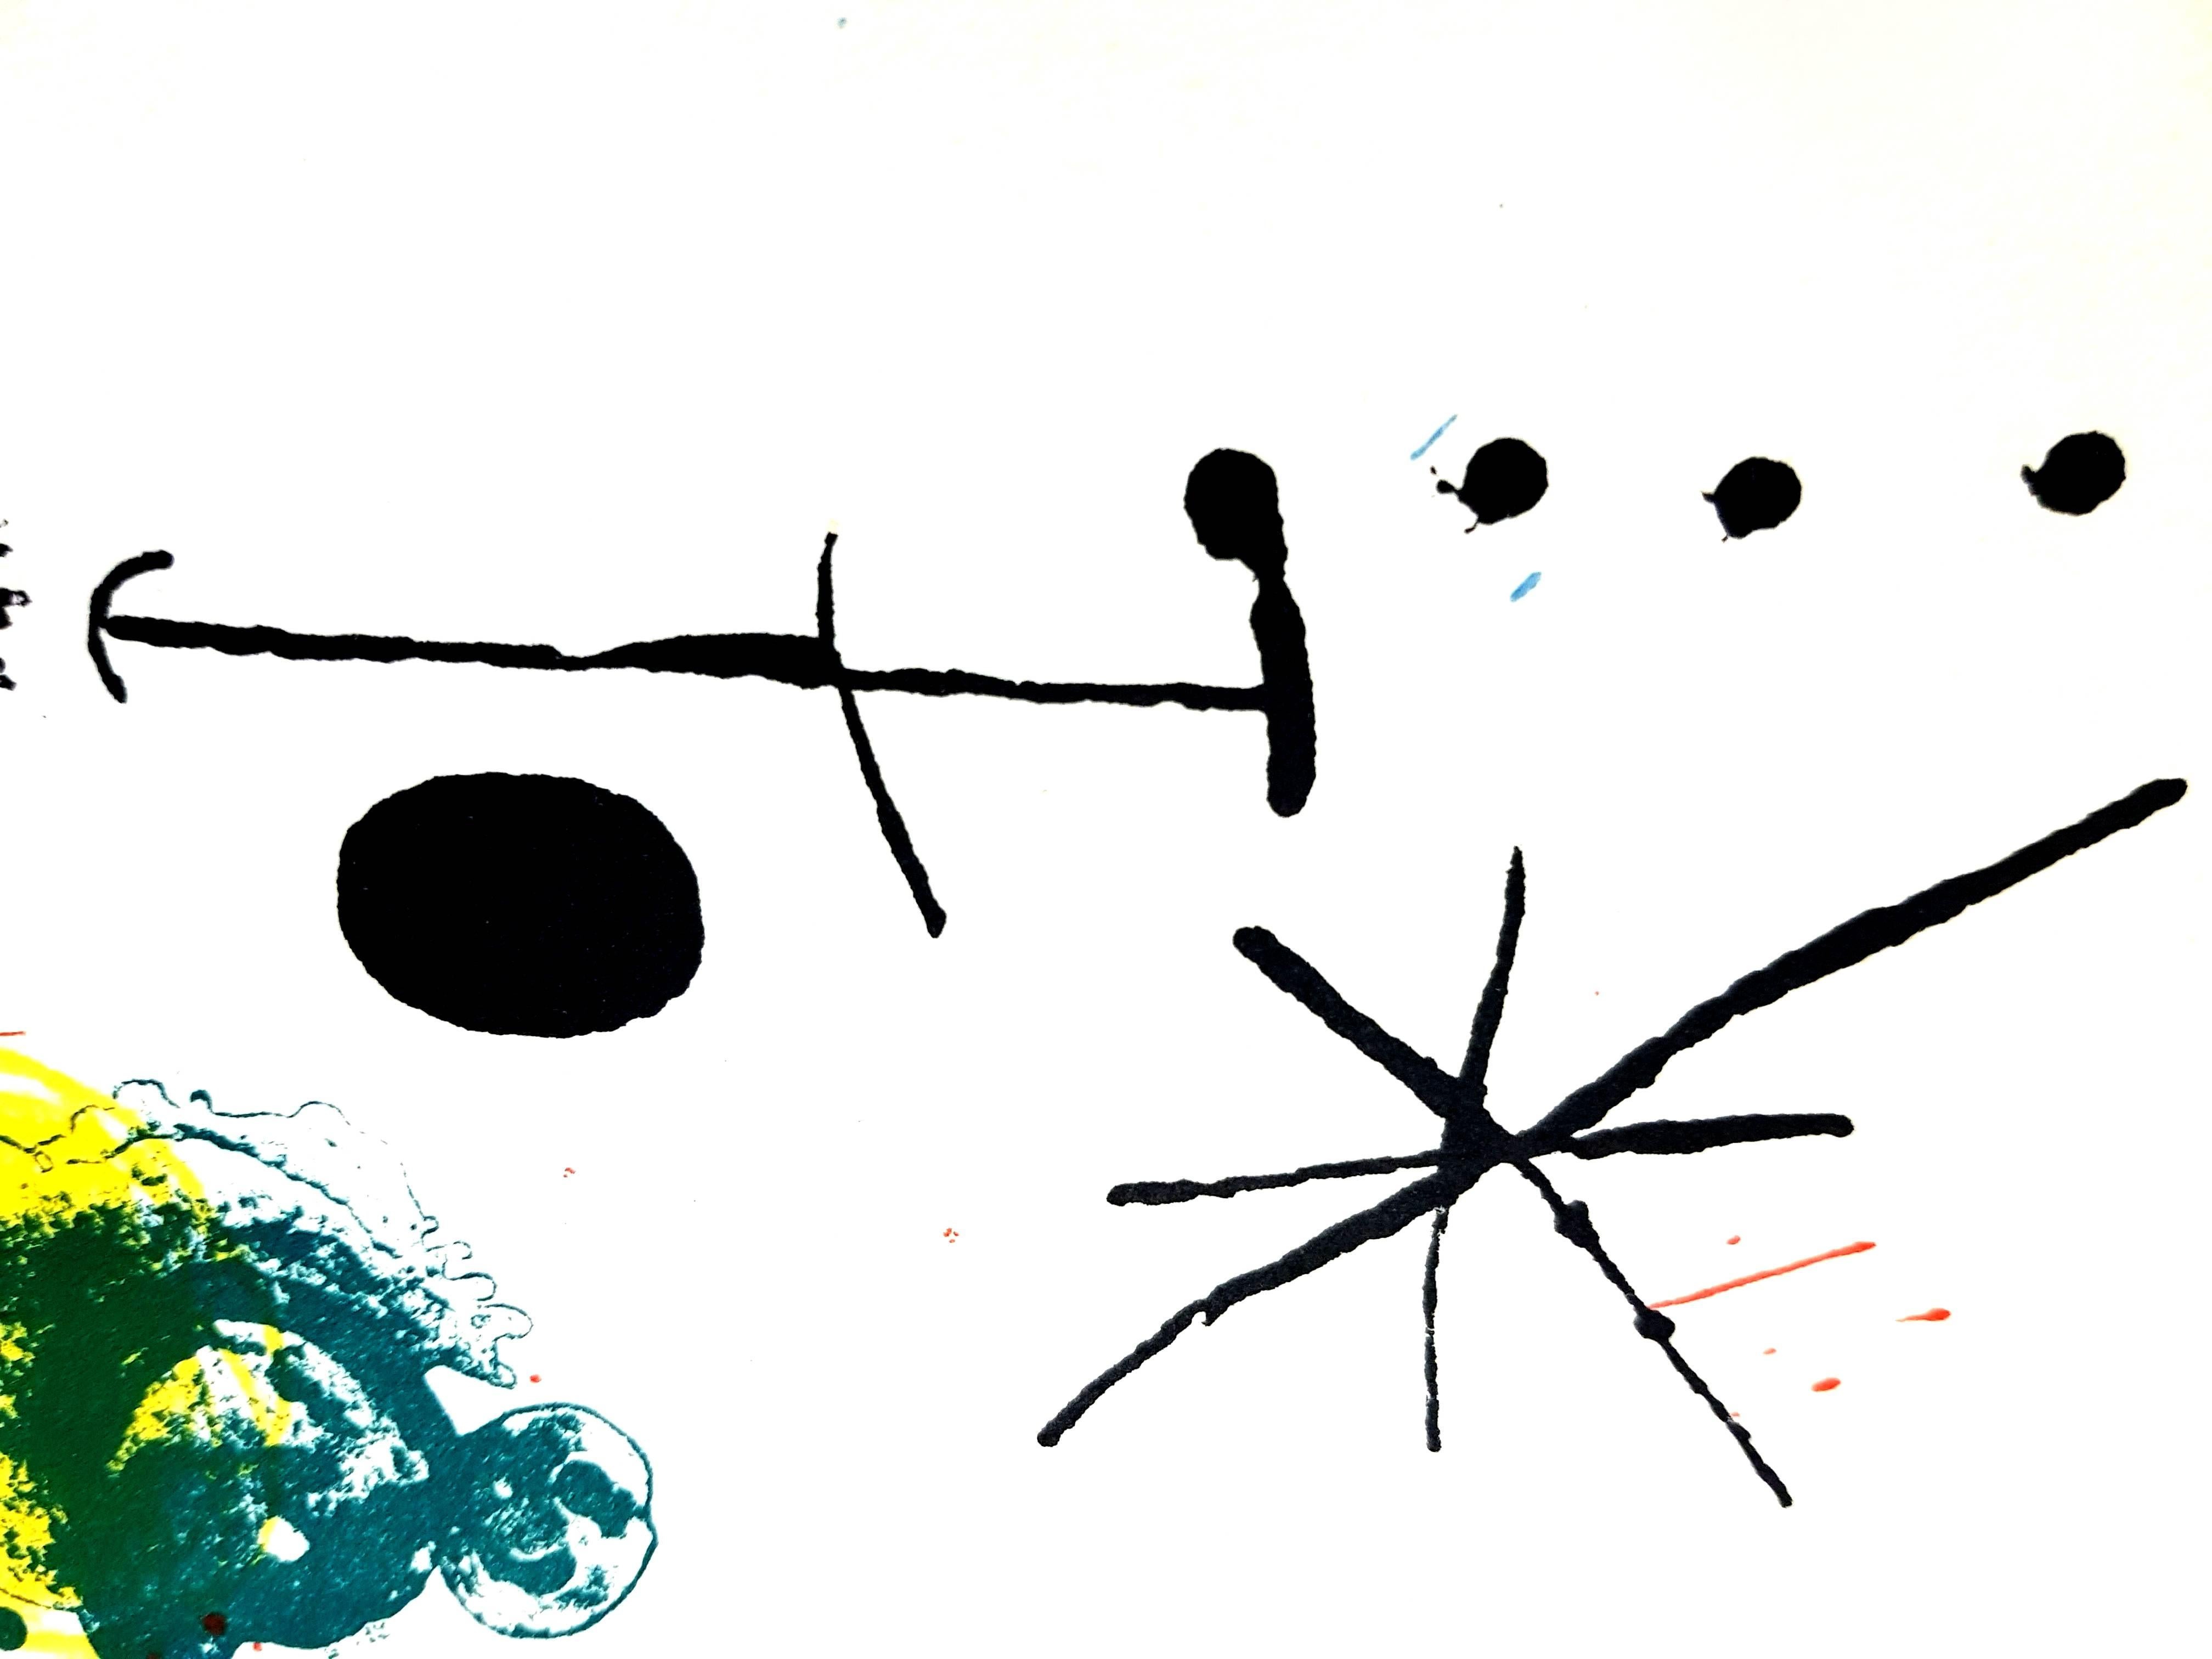 Joan Miro - Abstract Composition - Original Lithograph  - Modern Print by Joan Miró